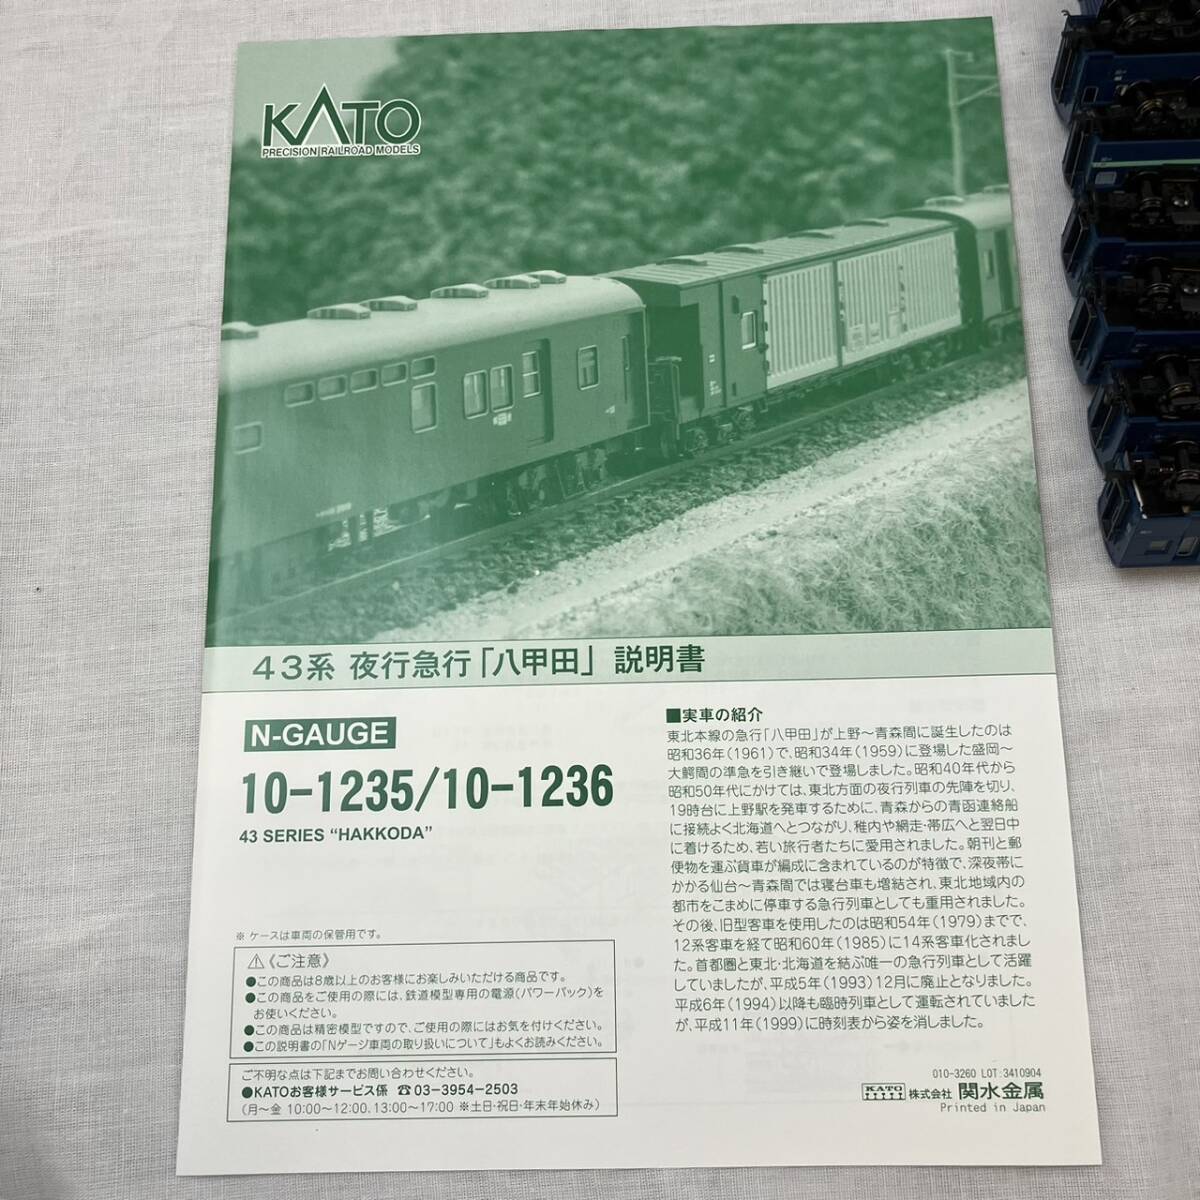 [5-89]KANTO 43 series 43 SERIES HAKKODA night line express . Koda 7 both basic set railroad model 10-1235 10-1236